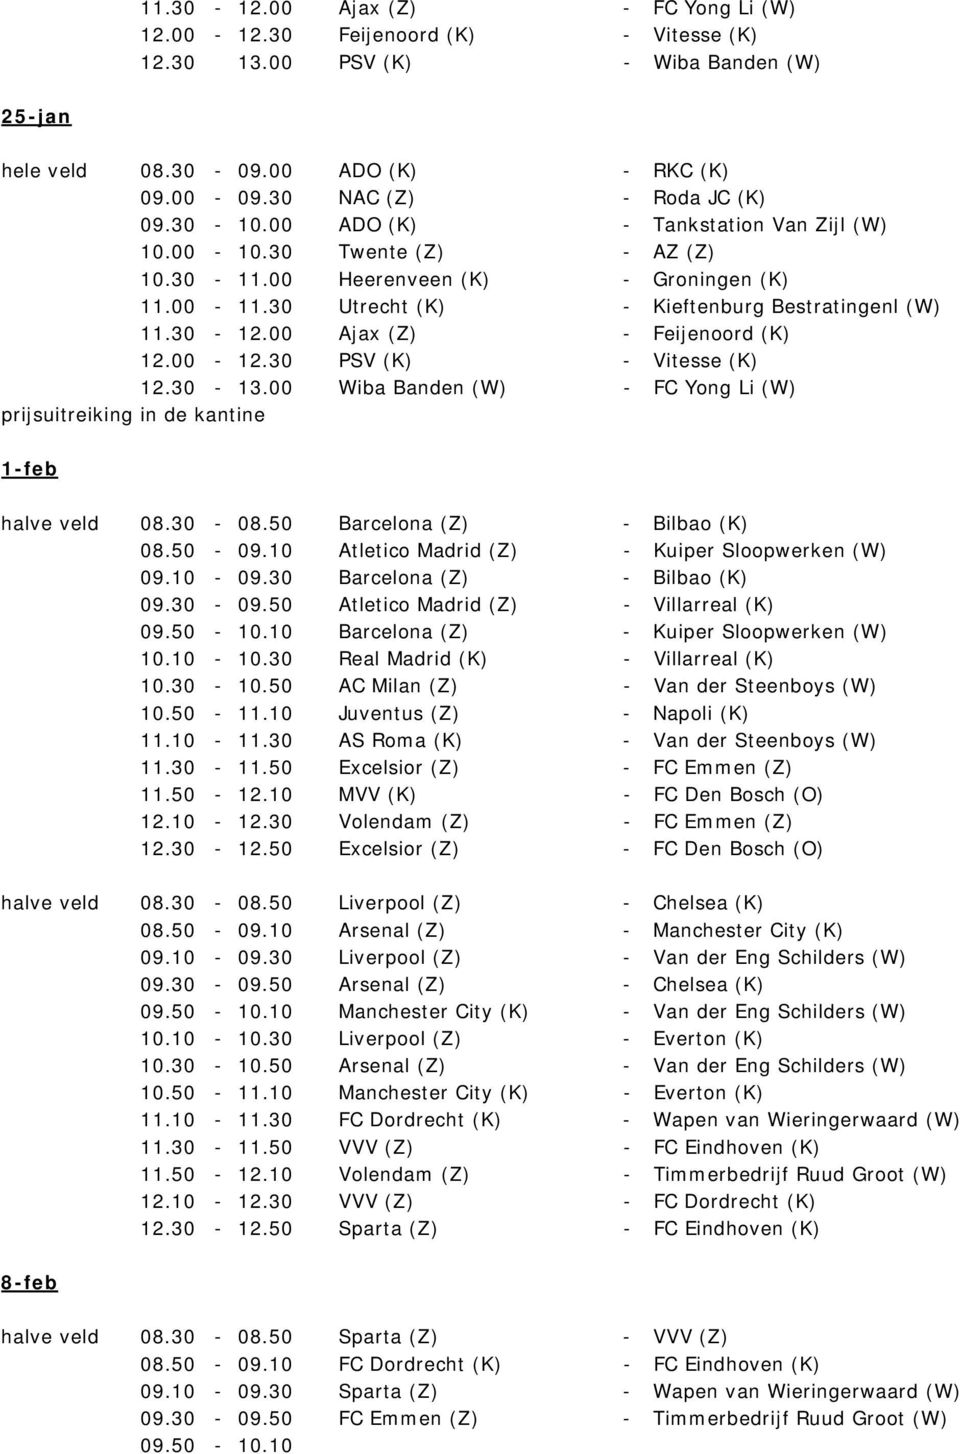 30 Utrecht (K) - Kieftenburg Bestratingenl (W) 11.30-12.00 Ajax (Z) - Feijenoord (K) 12.00-12.30 PSV (K) - Vitesse (K) 12.30-13.